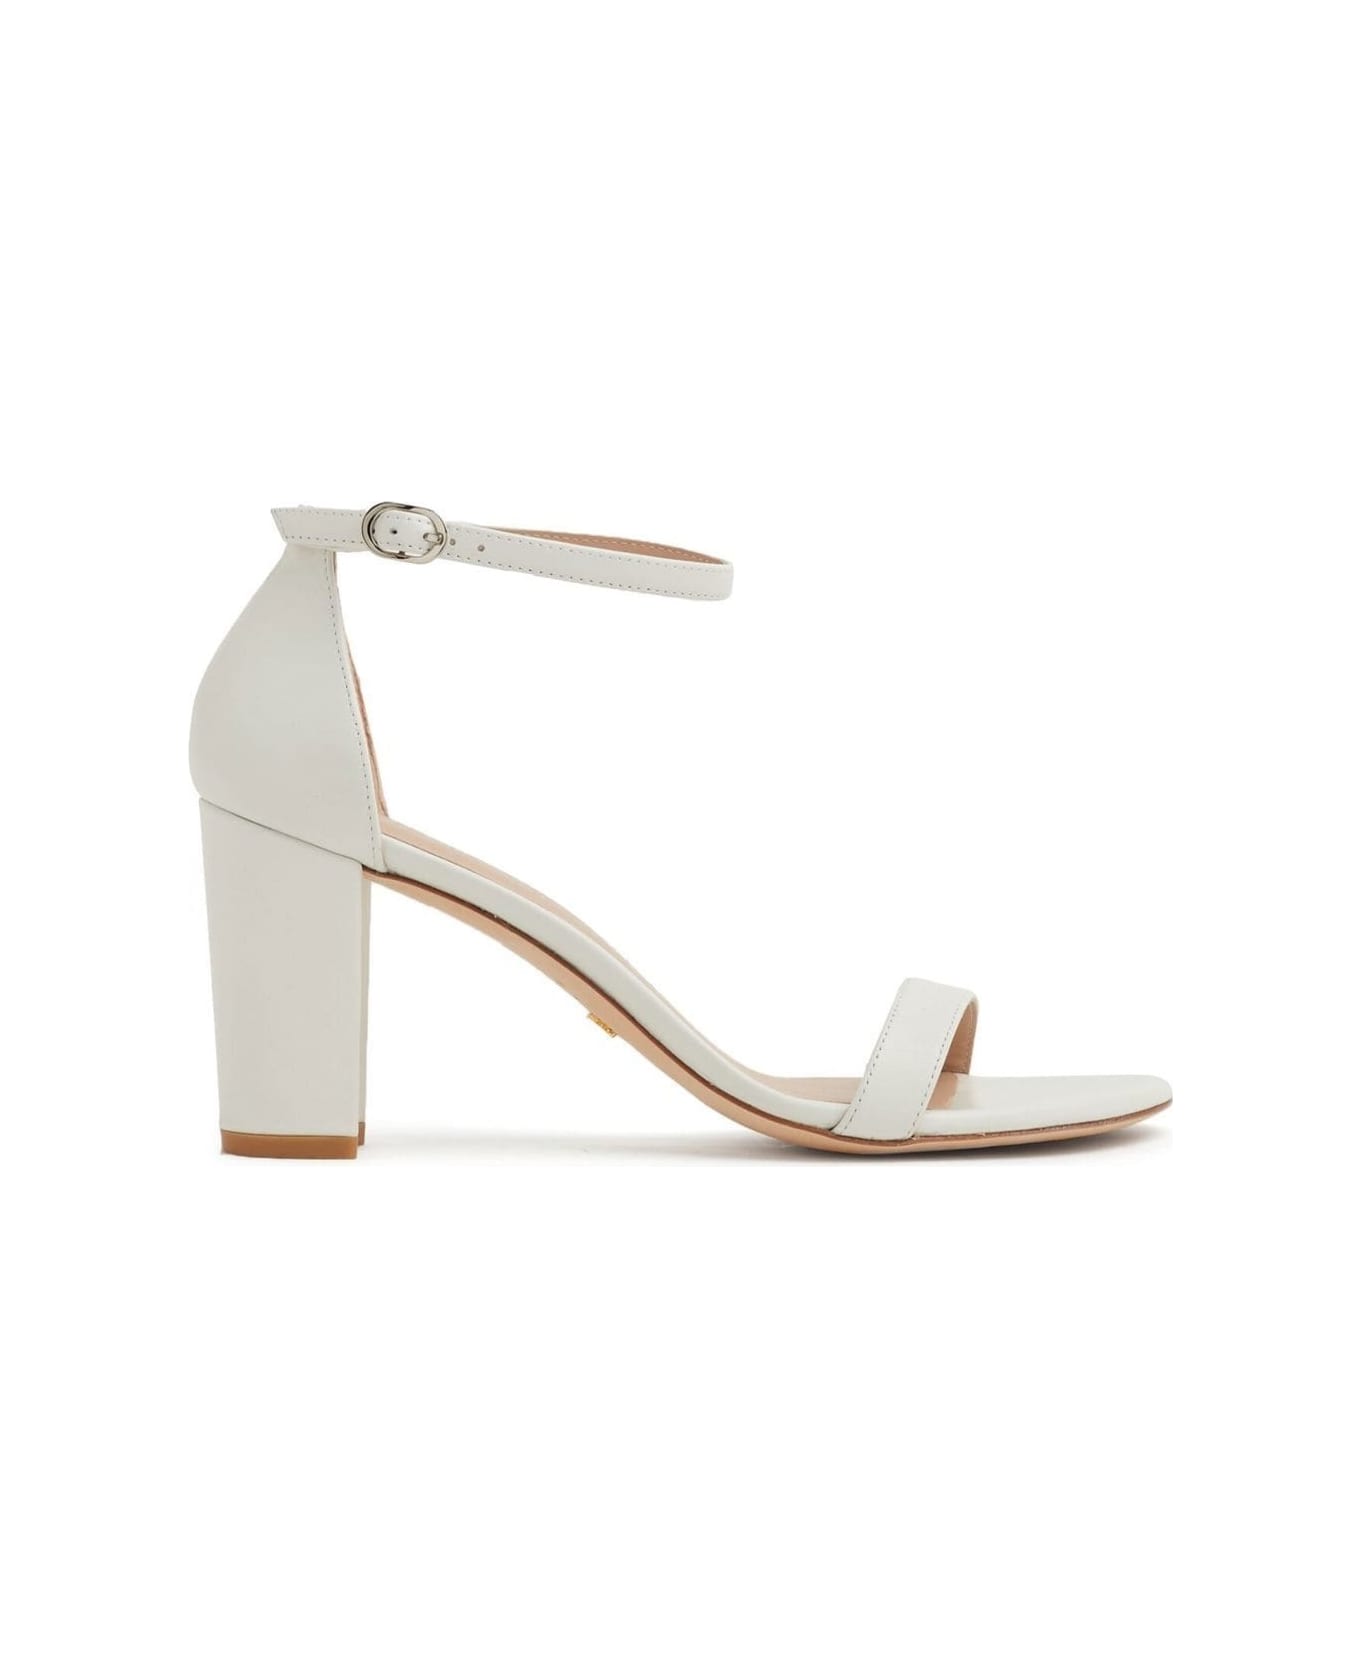 Stuart Weitzman Nearlynude Smooth Calfskin Sandals - White